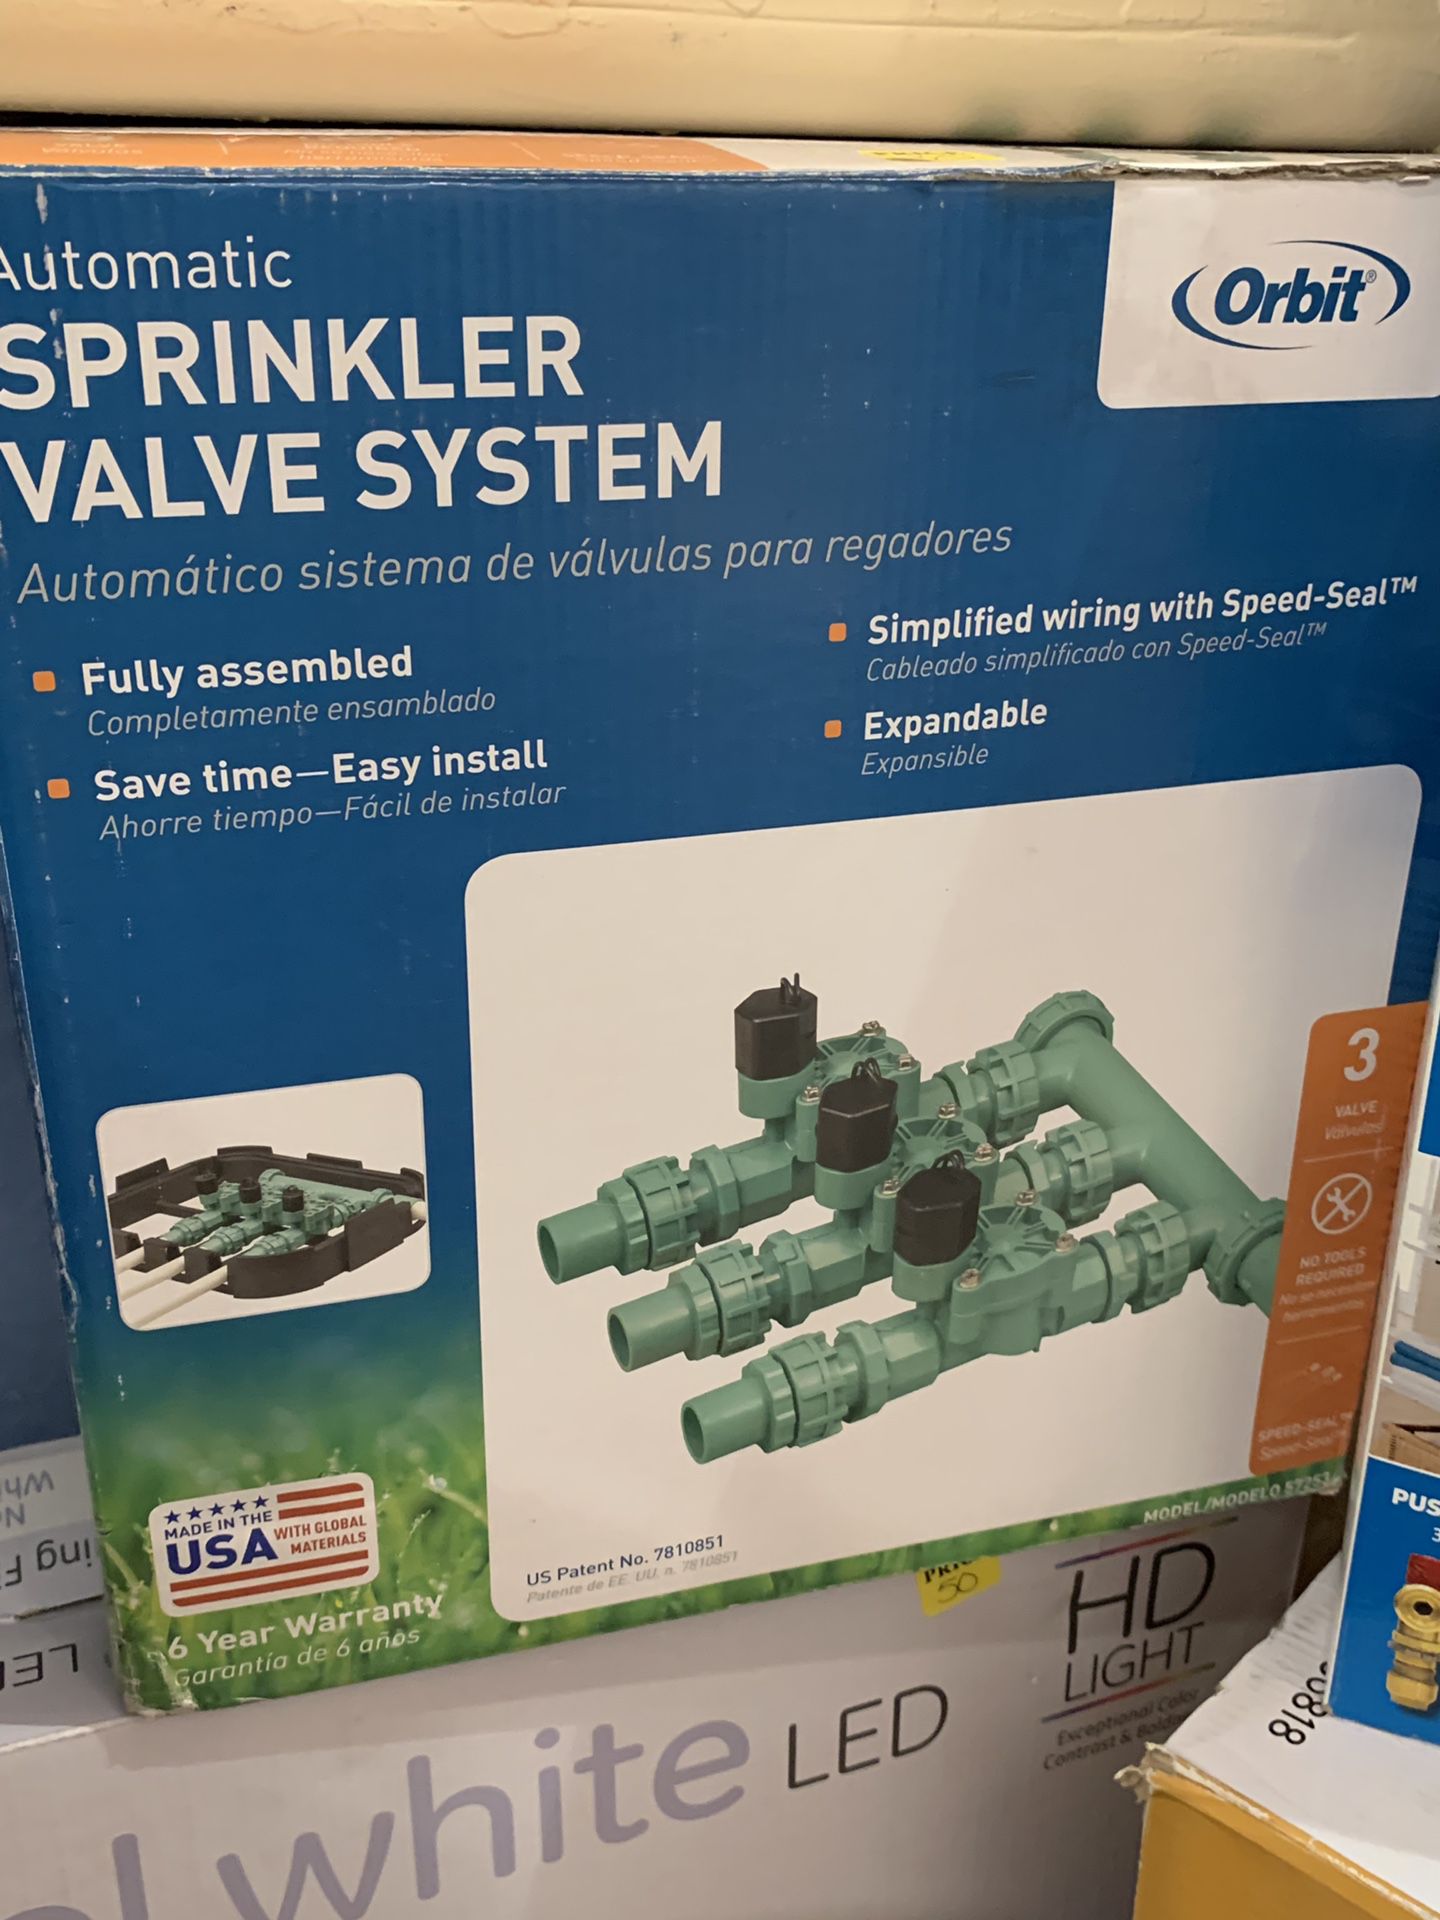 New sprinkler valve system